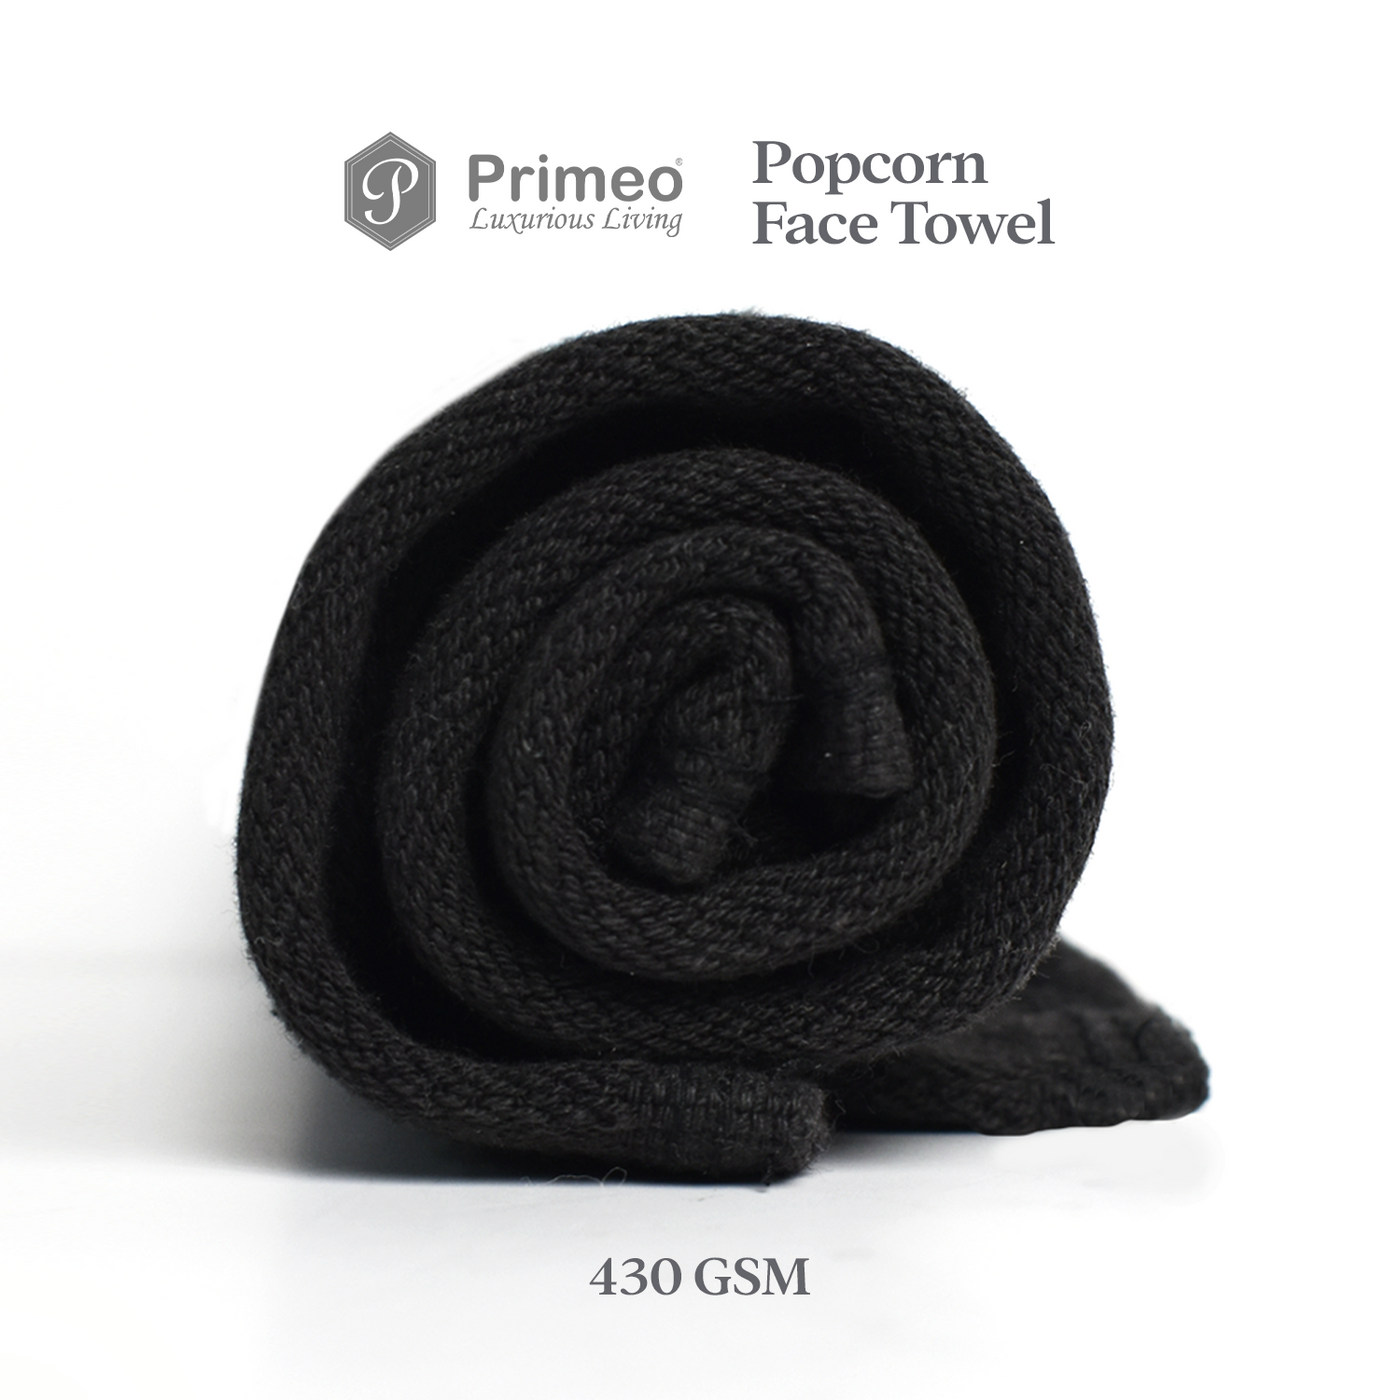 Primeo 100% Cotton Face Towel - Popcorn Weave Collection Towels